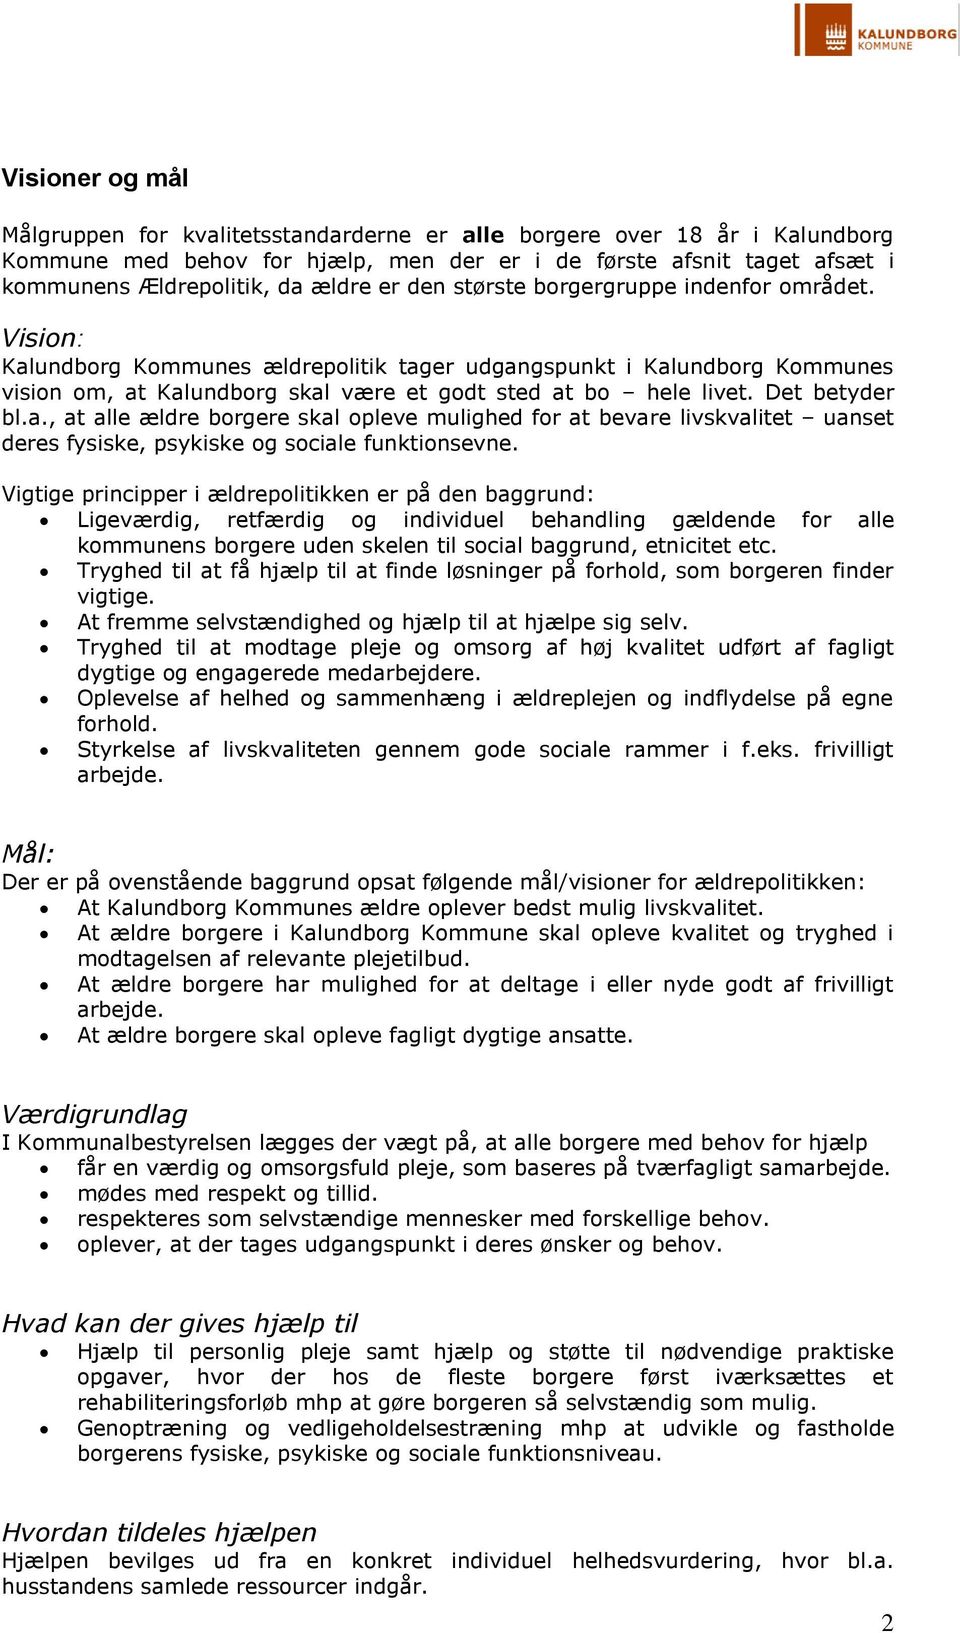 Kvalitetsstandarder. Kalundborg Kommune PDF Gratis download